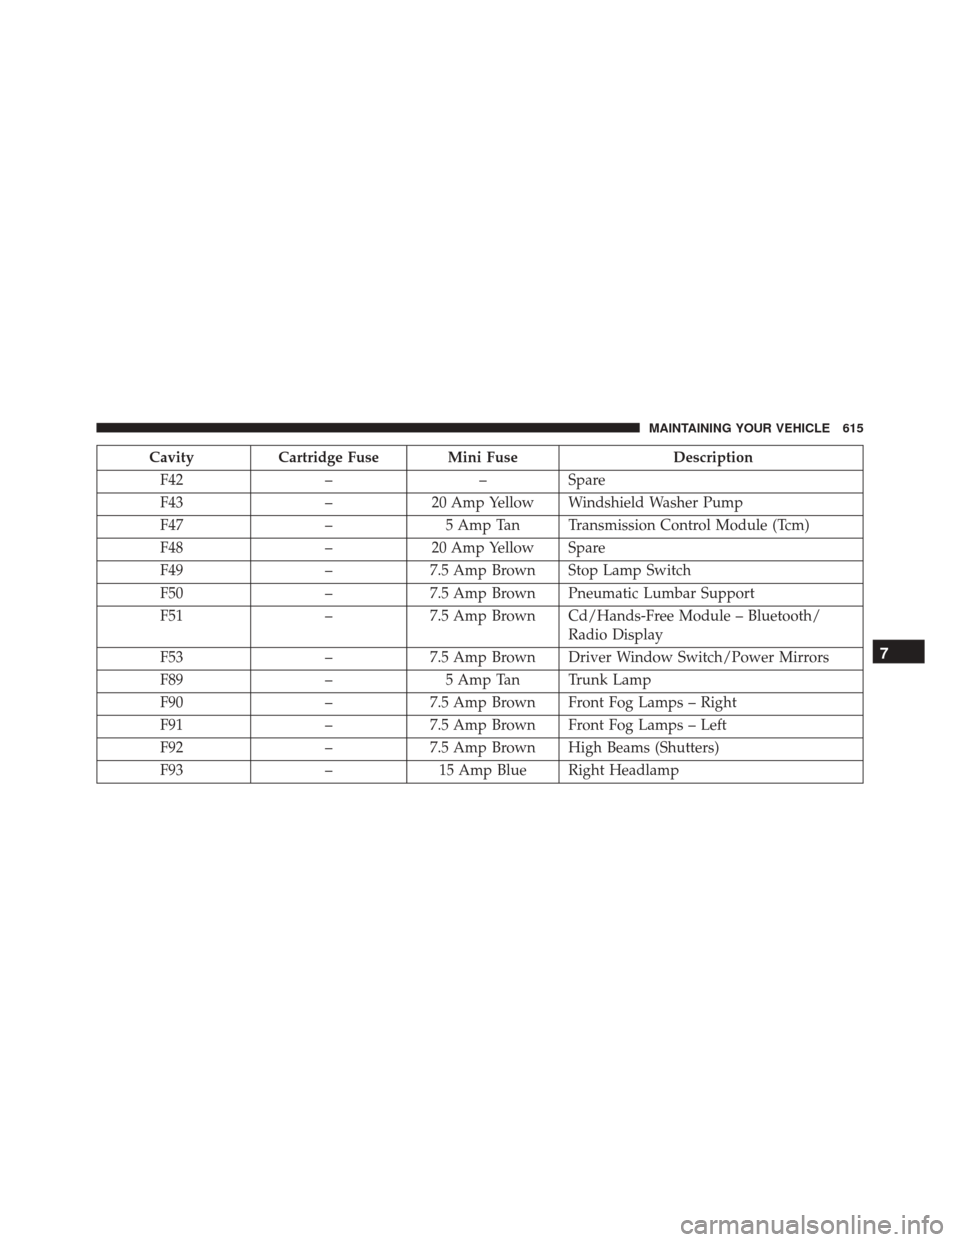 DODGE DART 2016 PF / 1.G Owners Manual CavityCartridge Fuse Mini Fuse Description
F42 ––Spare
F43 –20 Amp Yellow Windshield Washer Pump
F47 –5 Amp Tan Transmission Control Module (Tcm)
F48 –20 Amp Yellow Spare
F49 –7.5 Amp Brow